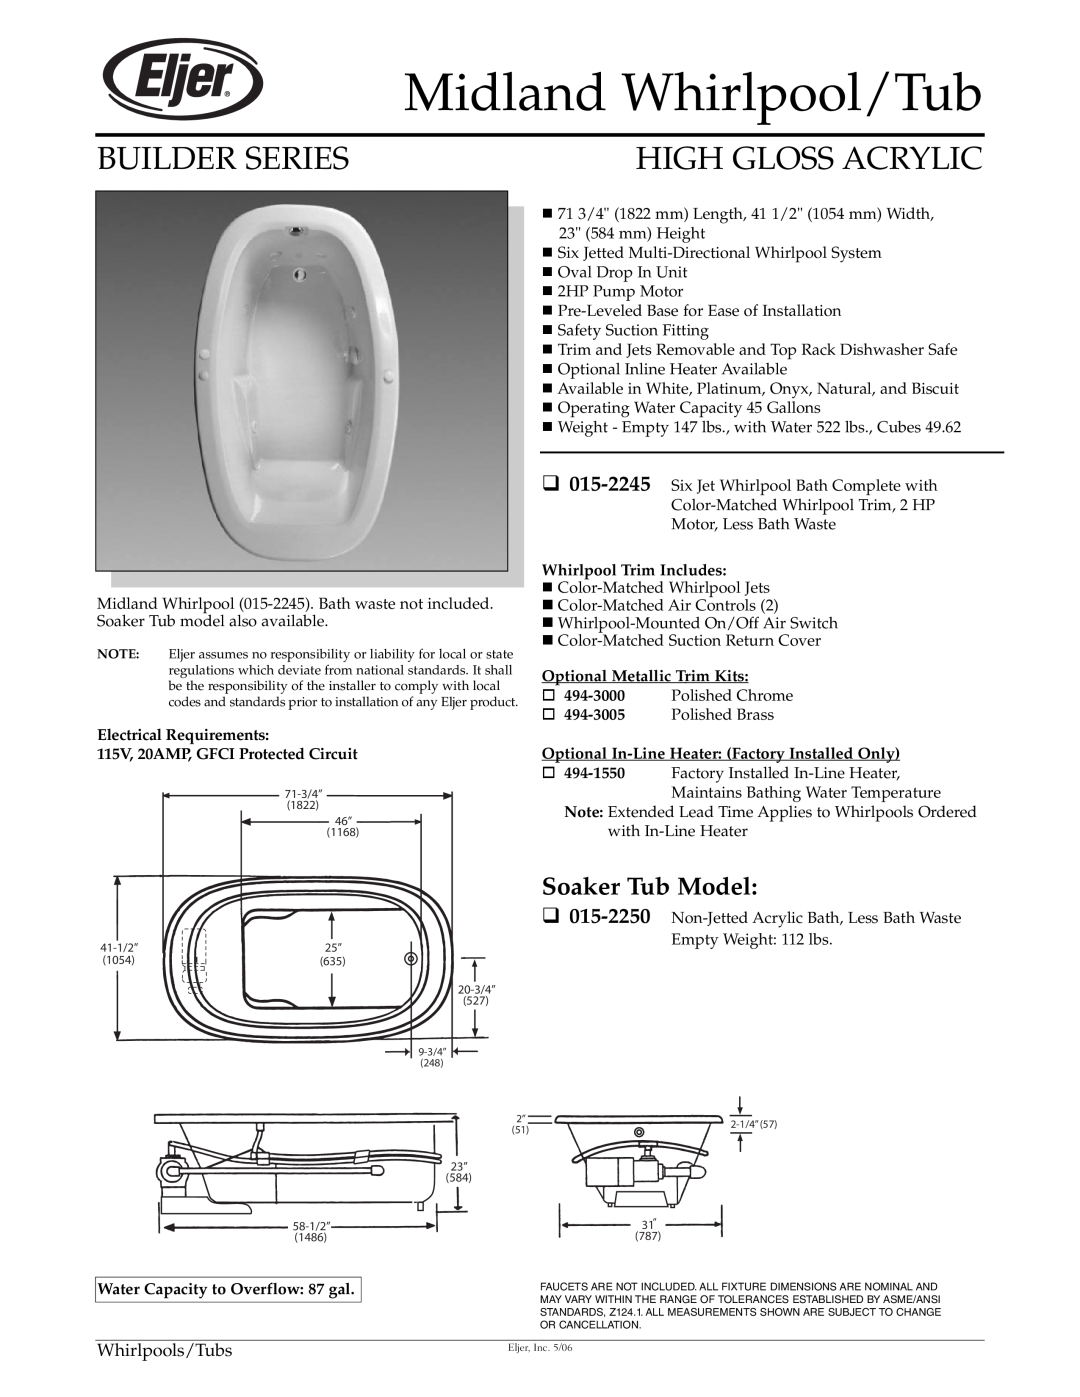 American Standard 015-2245 dimensions Midland Whirlpool/Tub, Builder Series, High Gloss Acrylic, Soaker Tub Model 